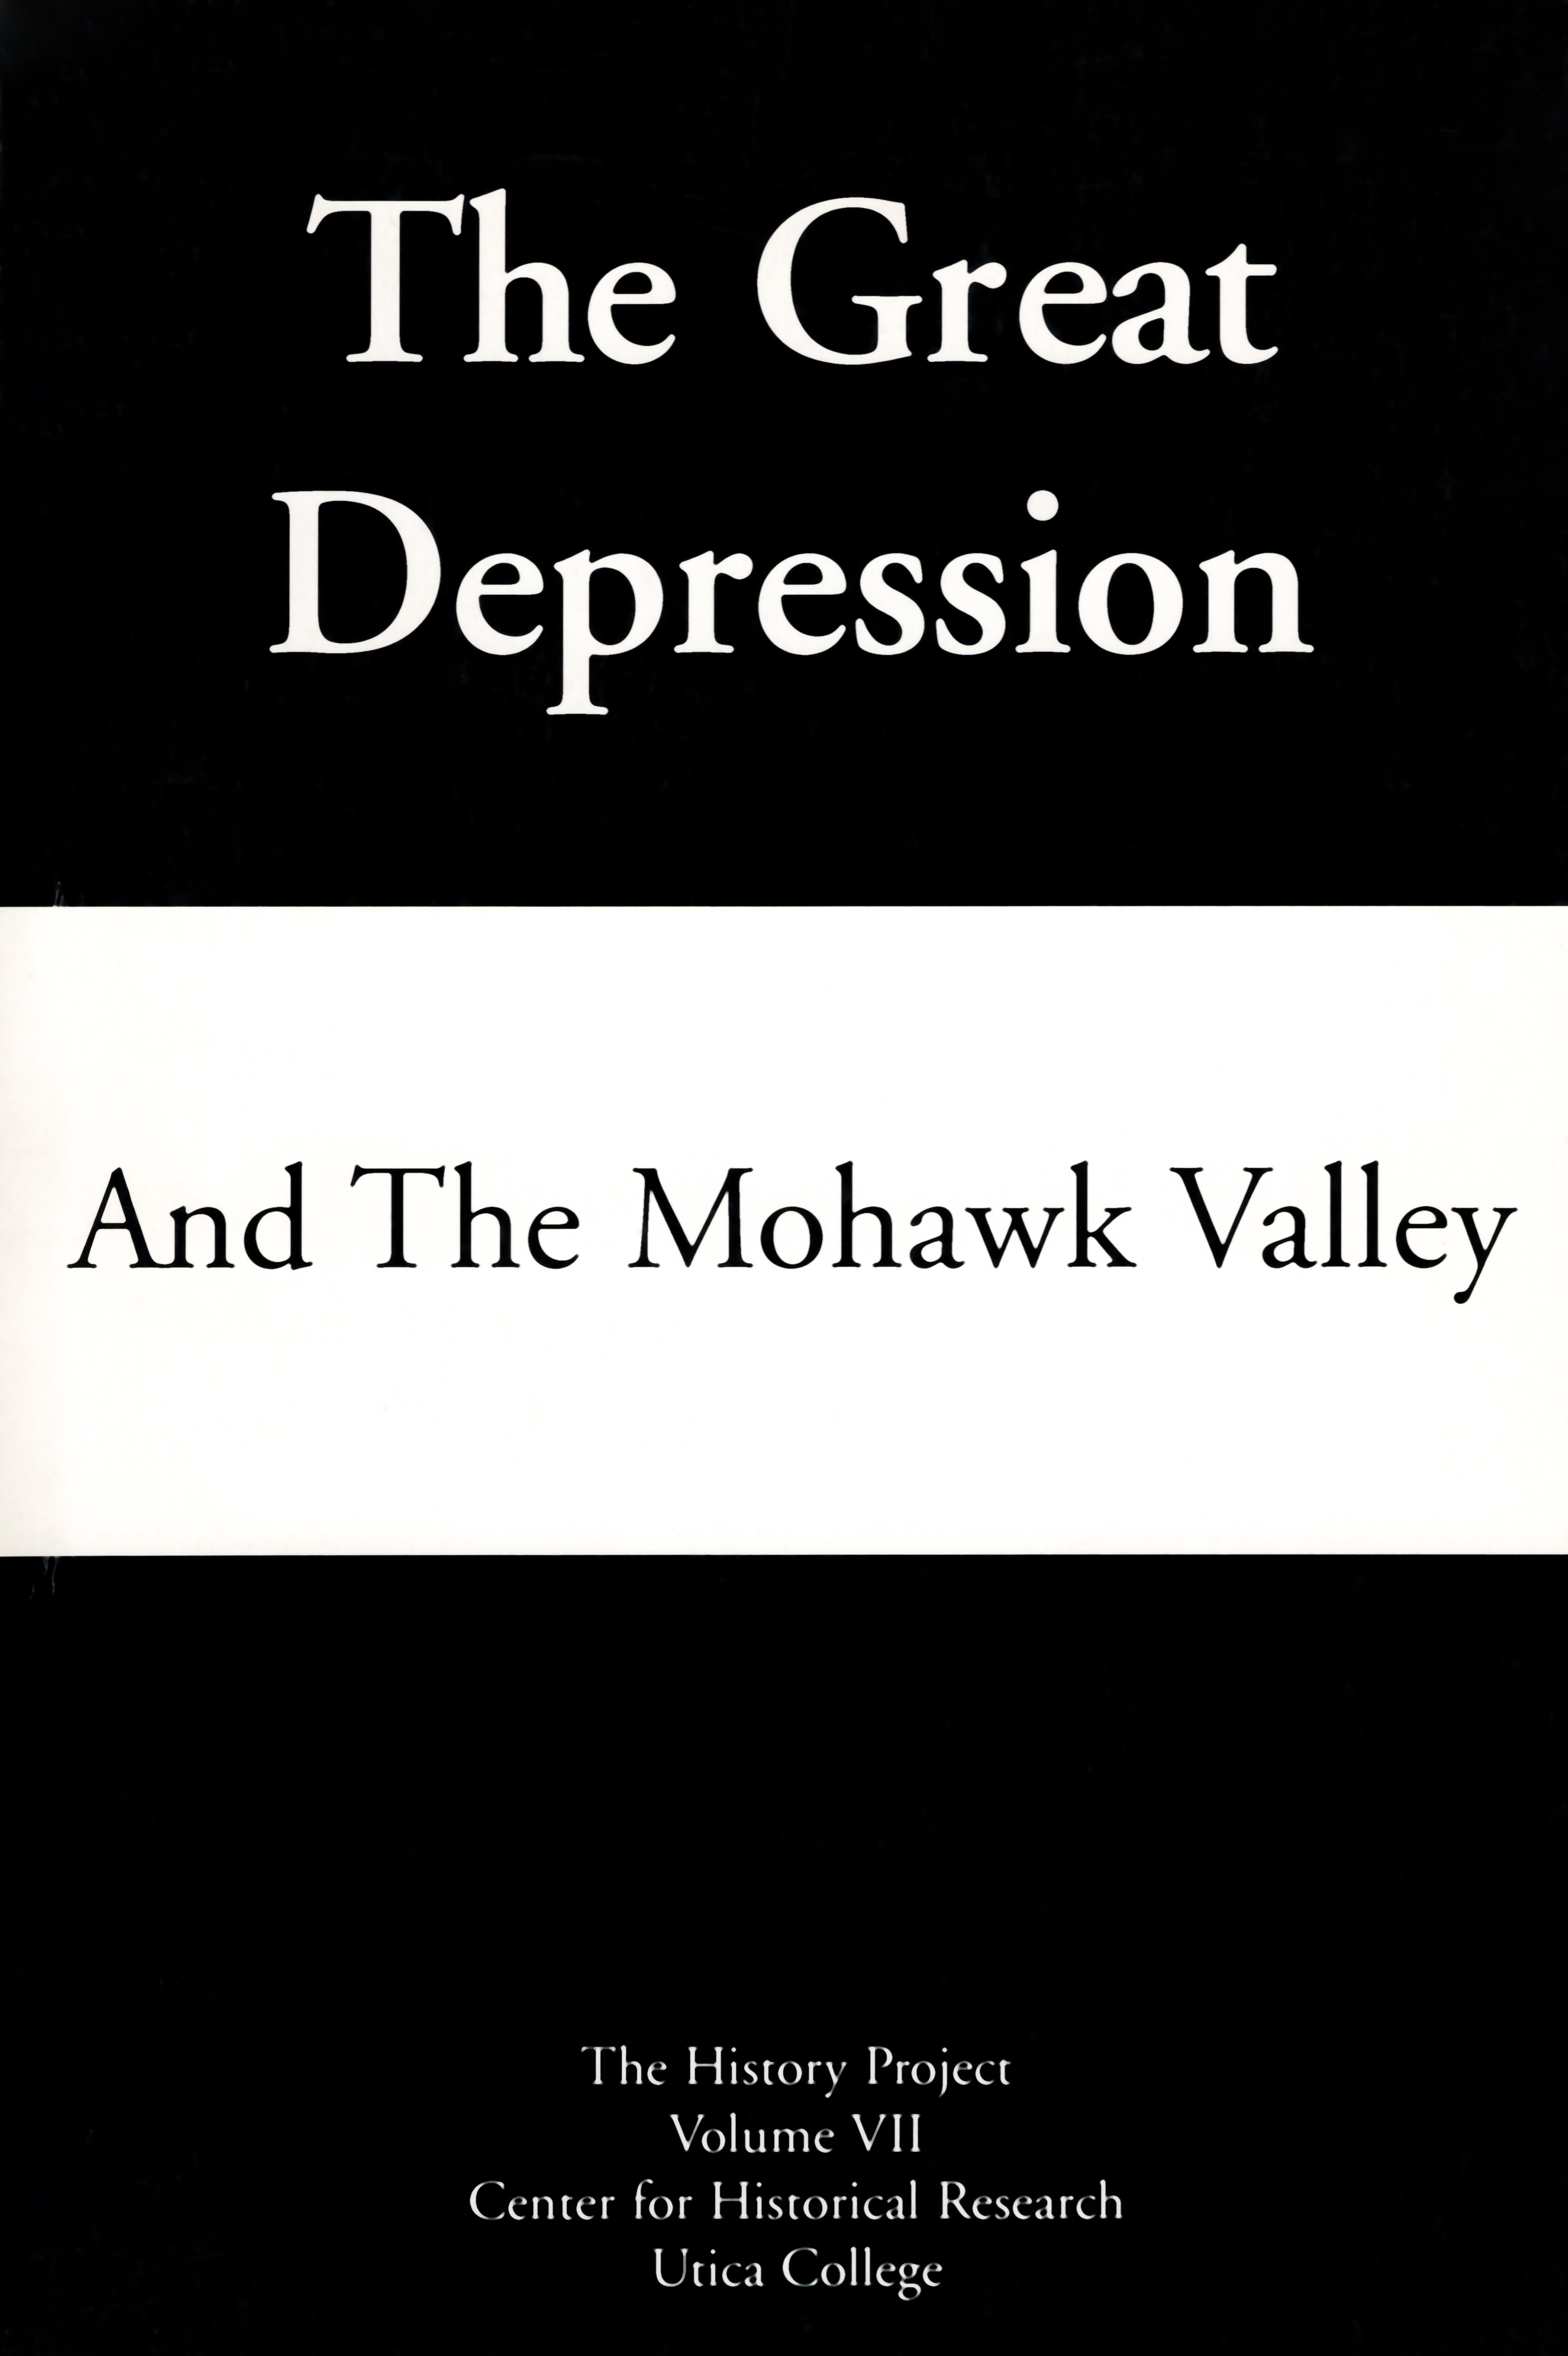 Great_Depression